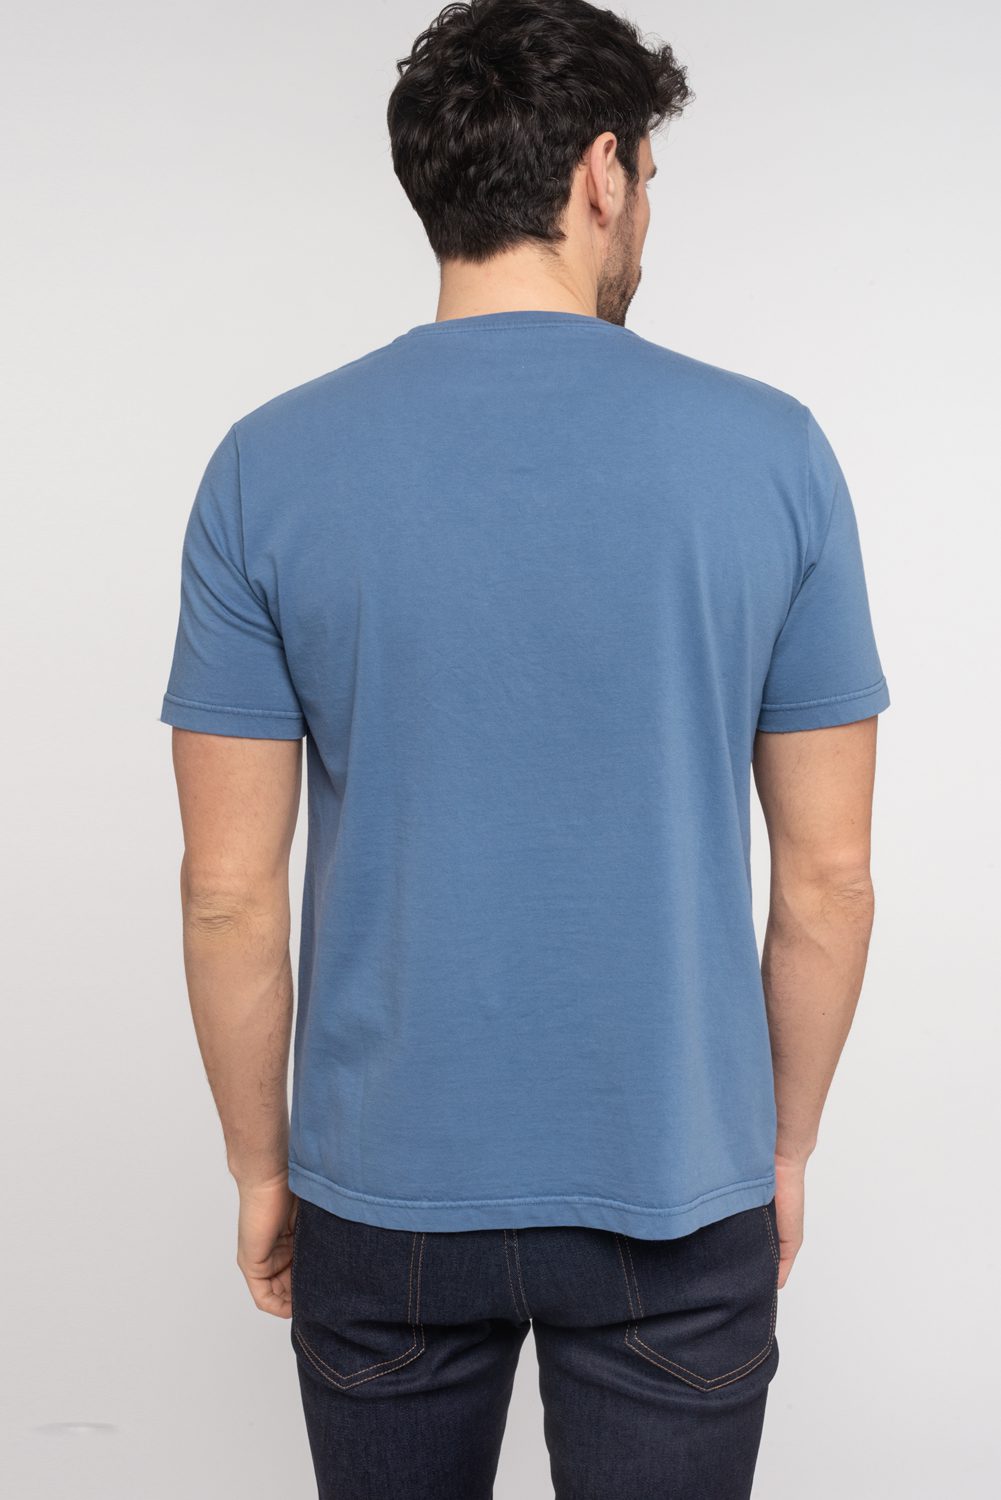 KIBO - T-shirt 100% Coton BIO - BLEU